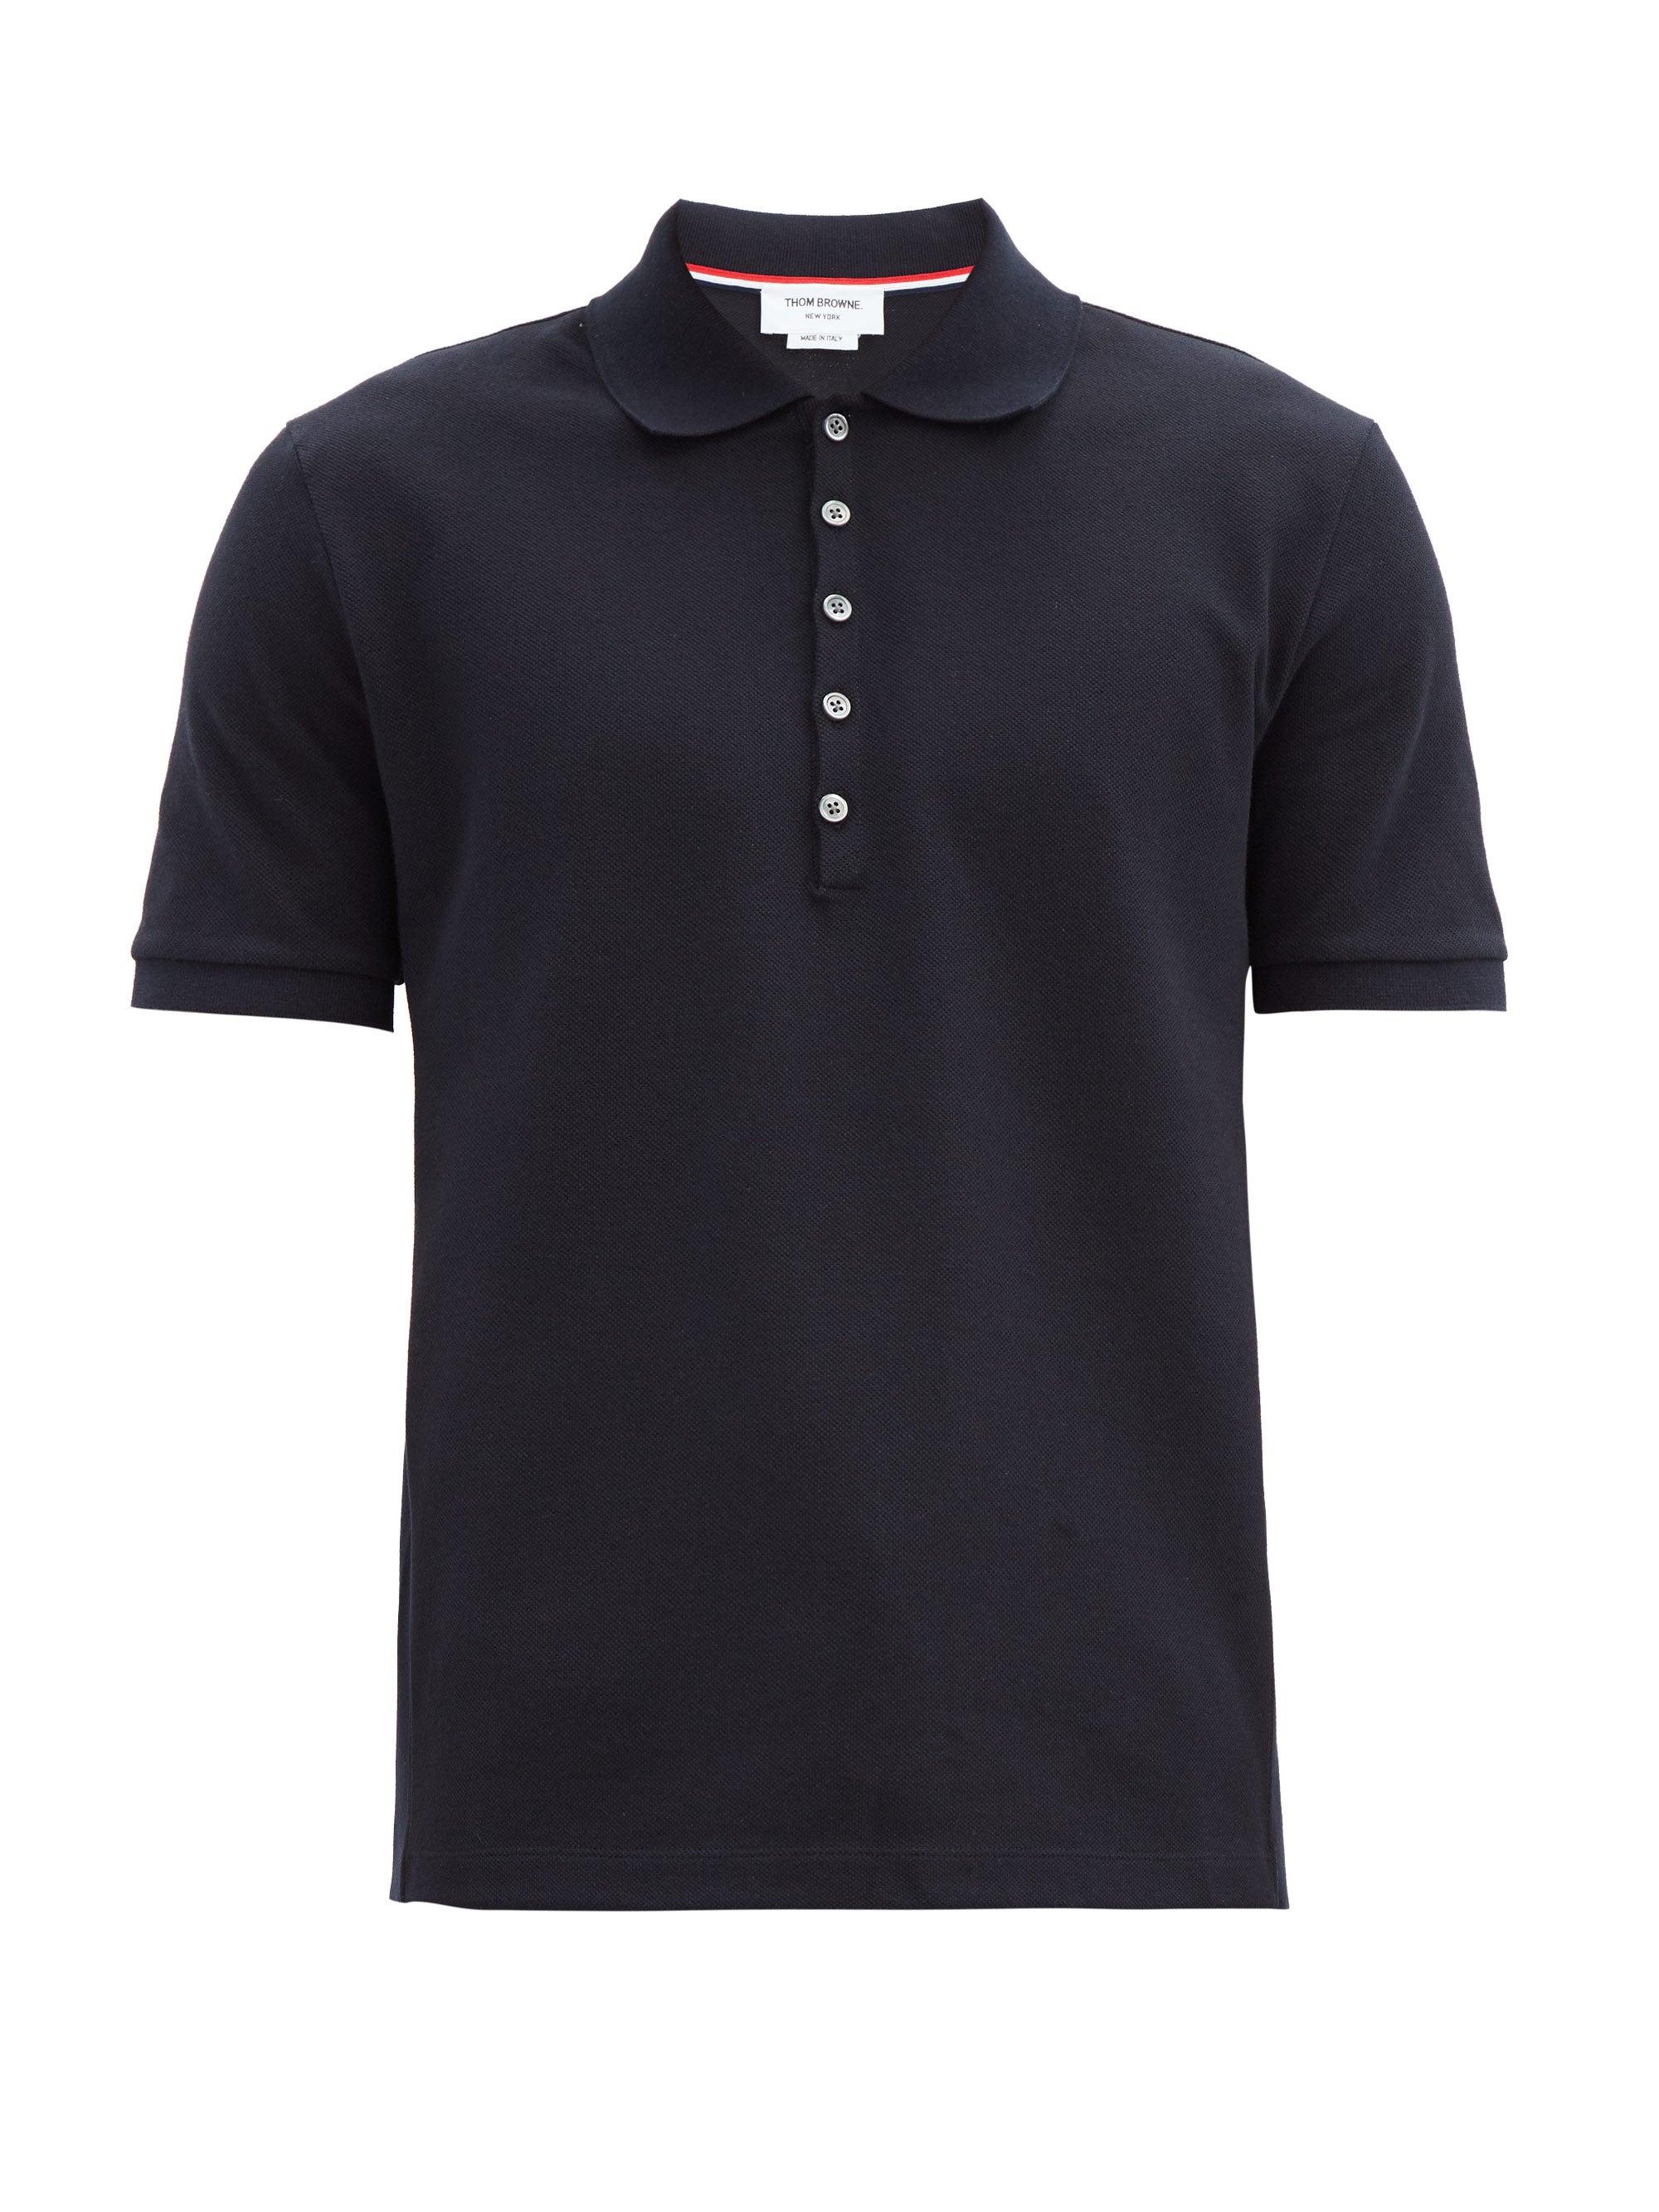 Thom Browne Four-bar Cotton-piqué Polo Shirt in Navy (Blue) for Men - Lyst